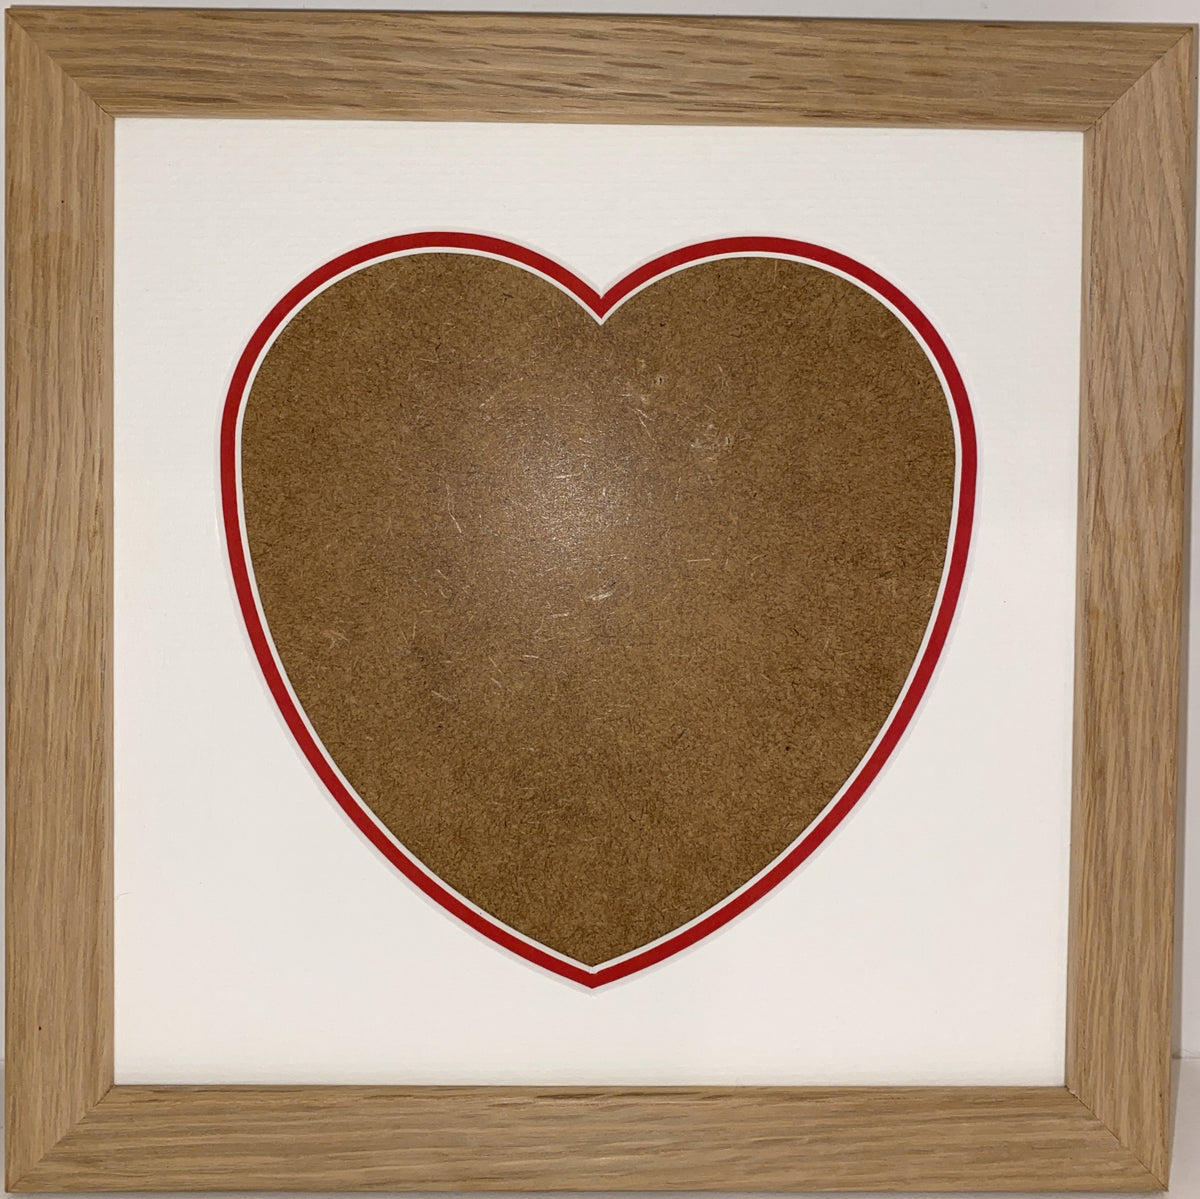 8 x 8 20mm Oak Veneer Wood Frame with Love Heart Double Mount